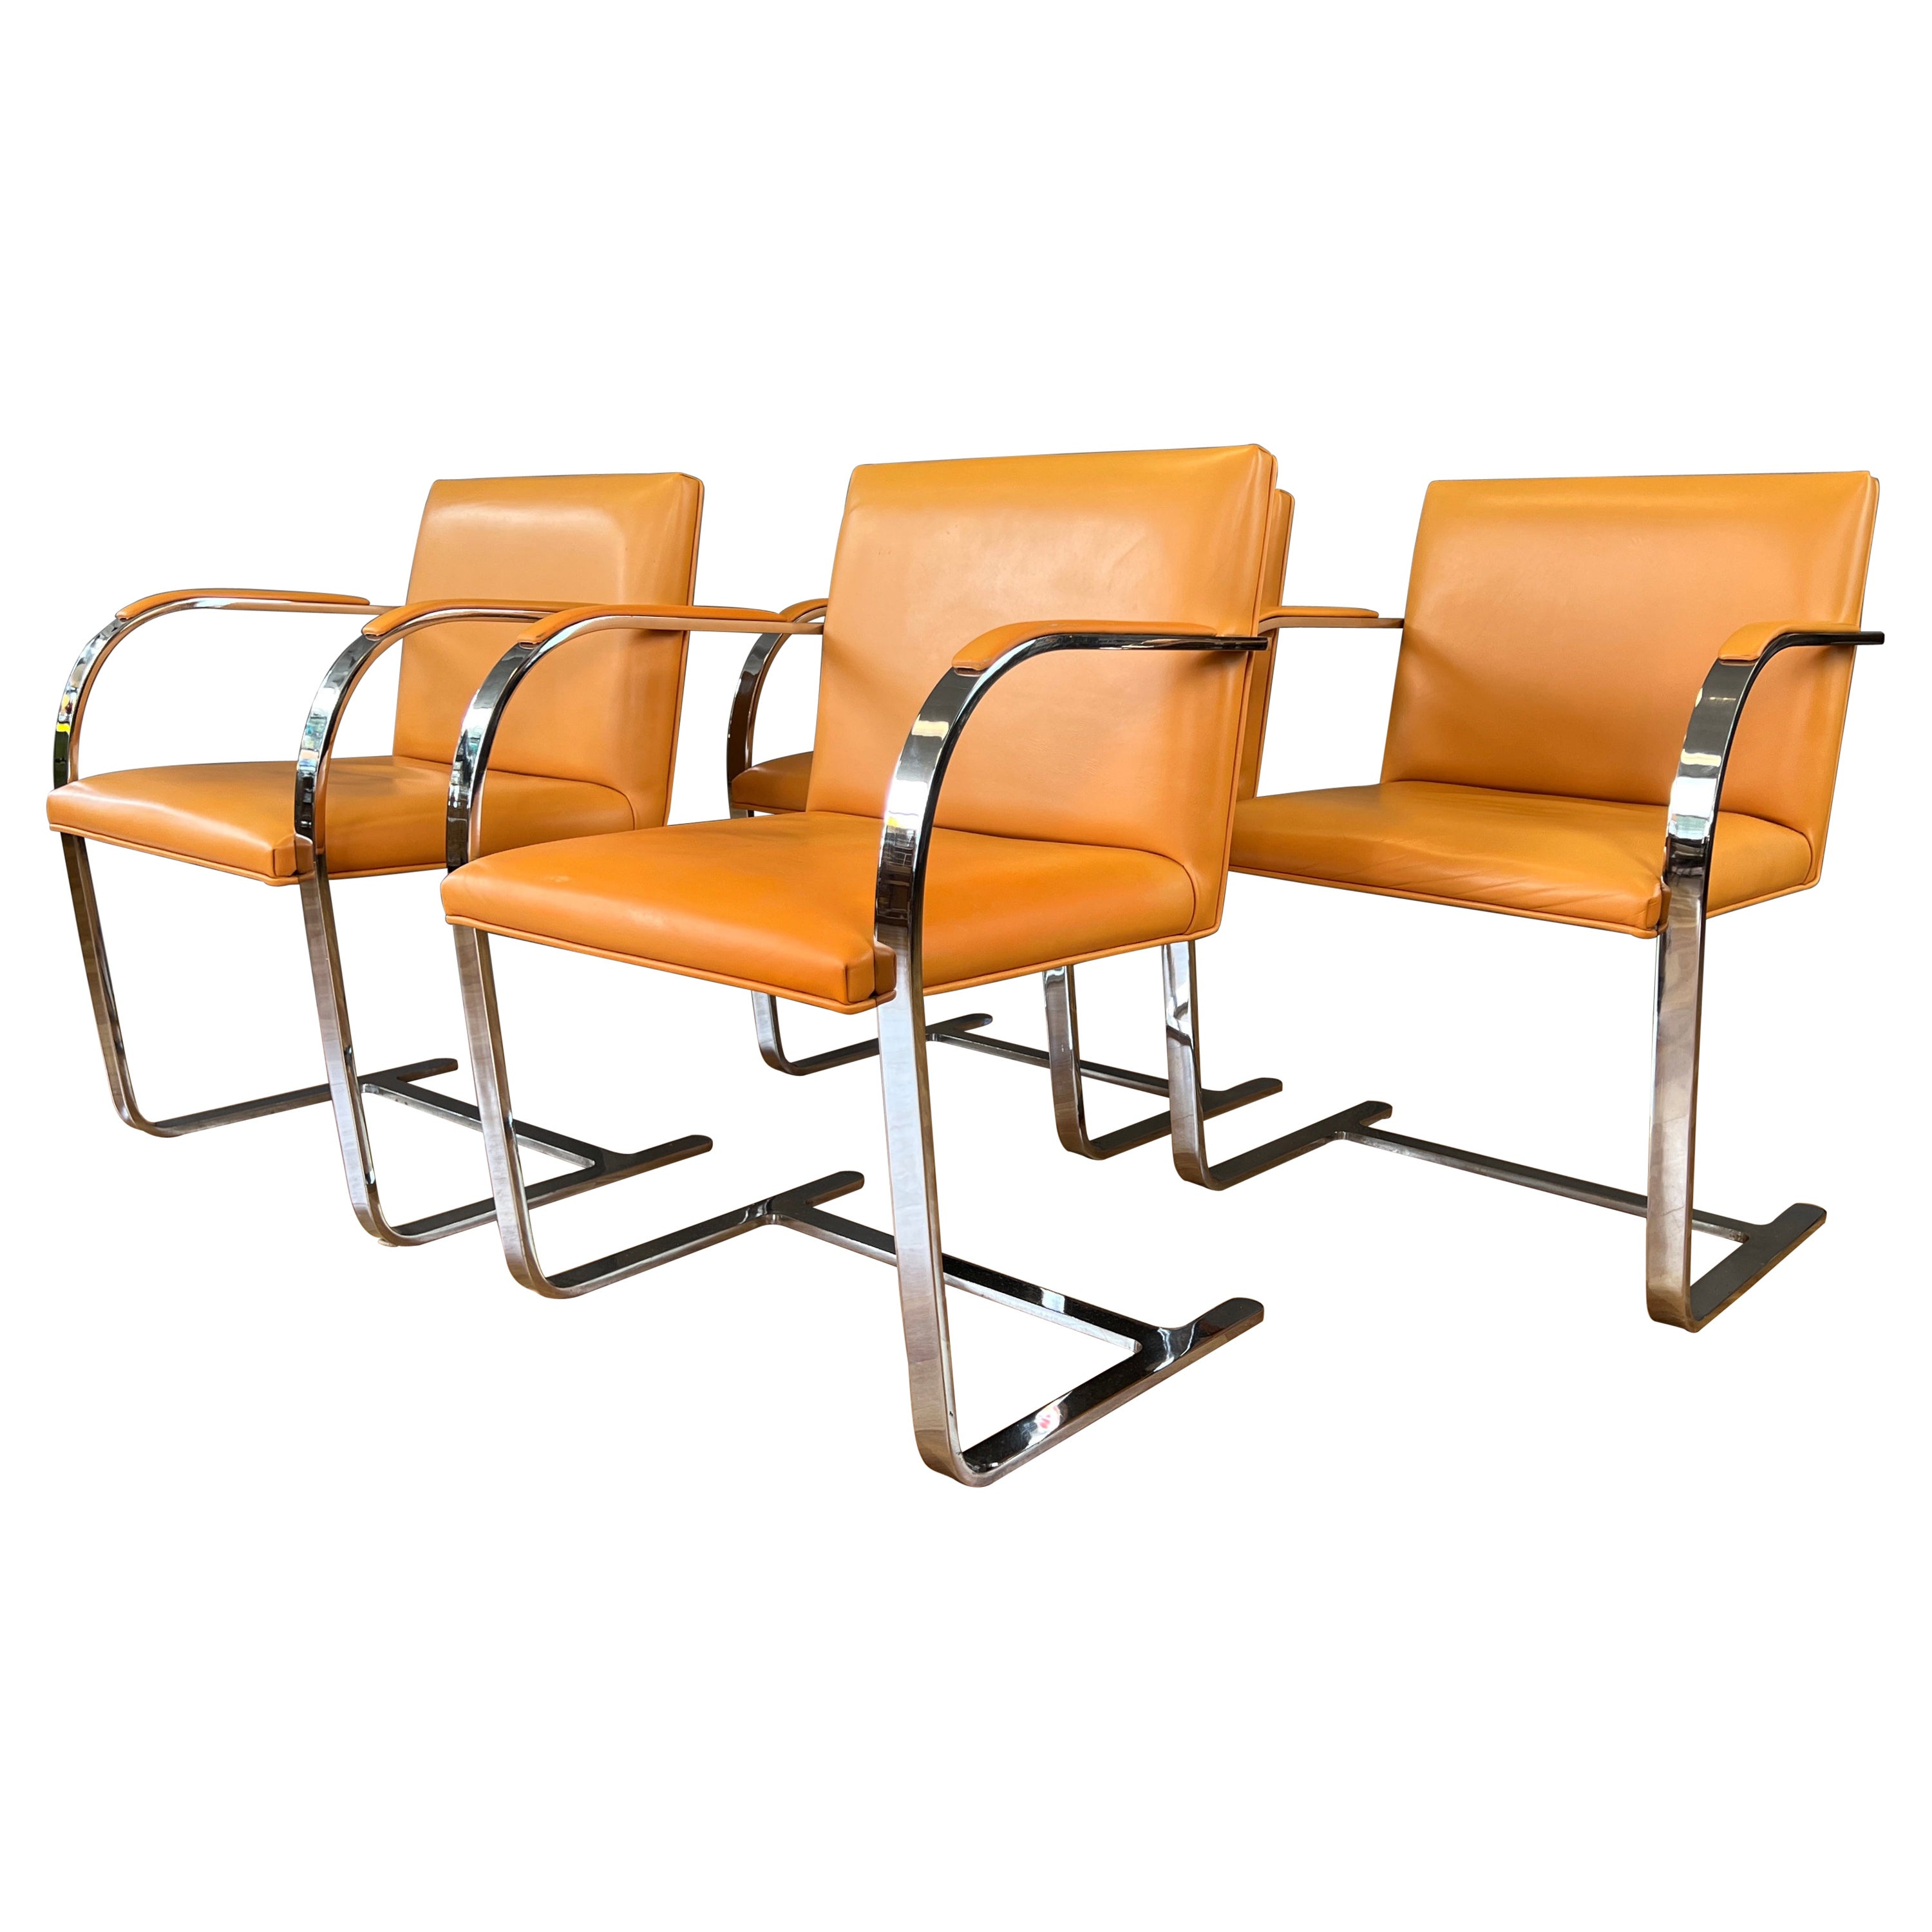 C. 1970s, Four Gordon International Flat Bar Brno Armchairs in Orange Leather